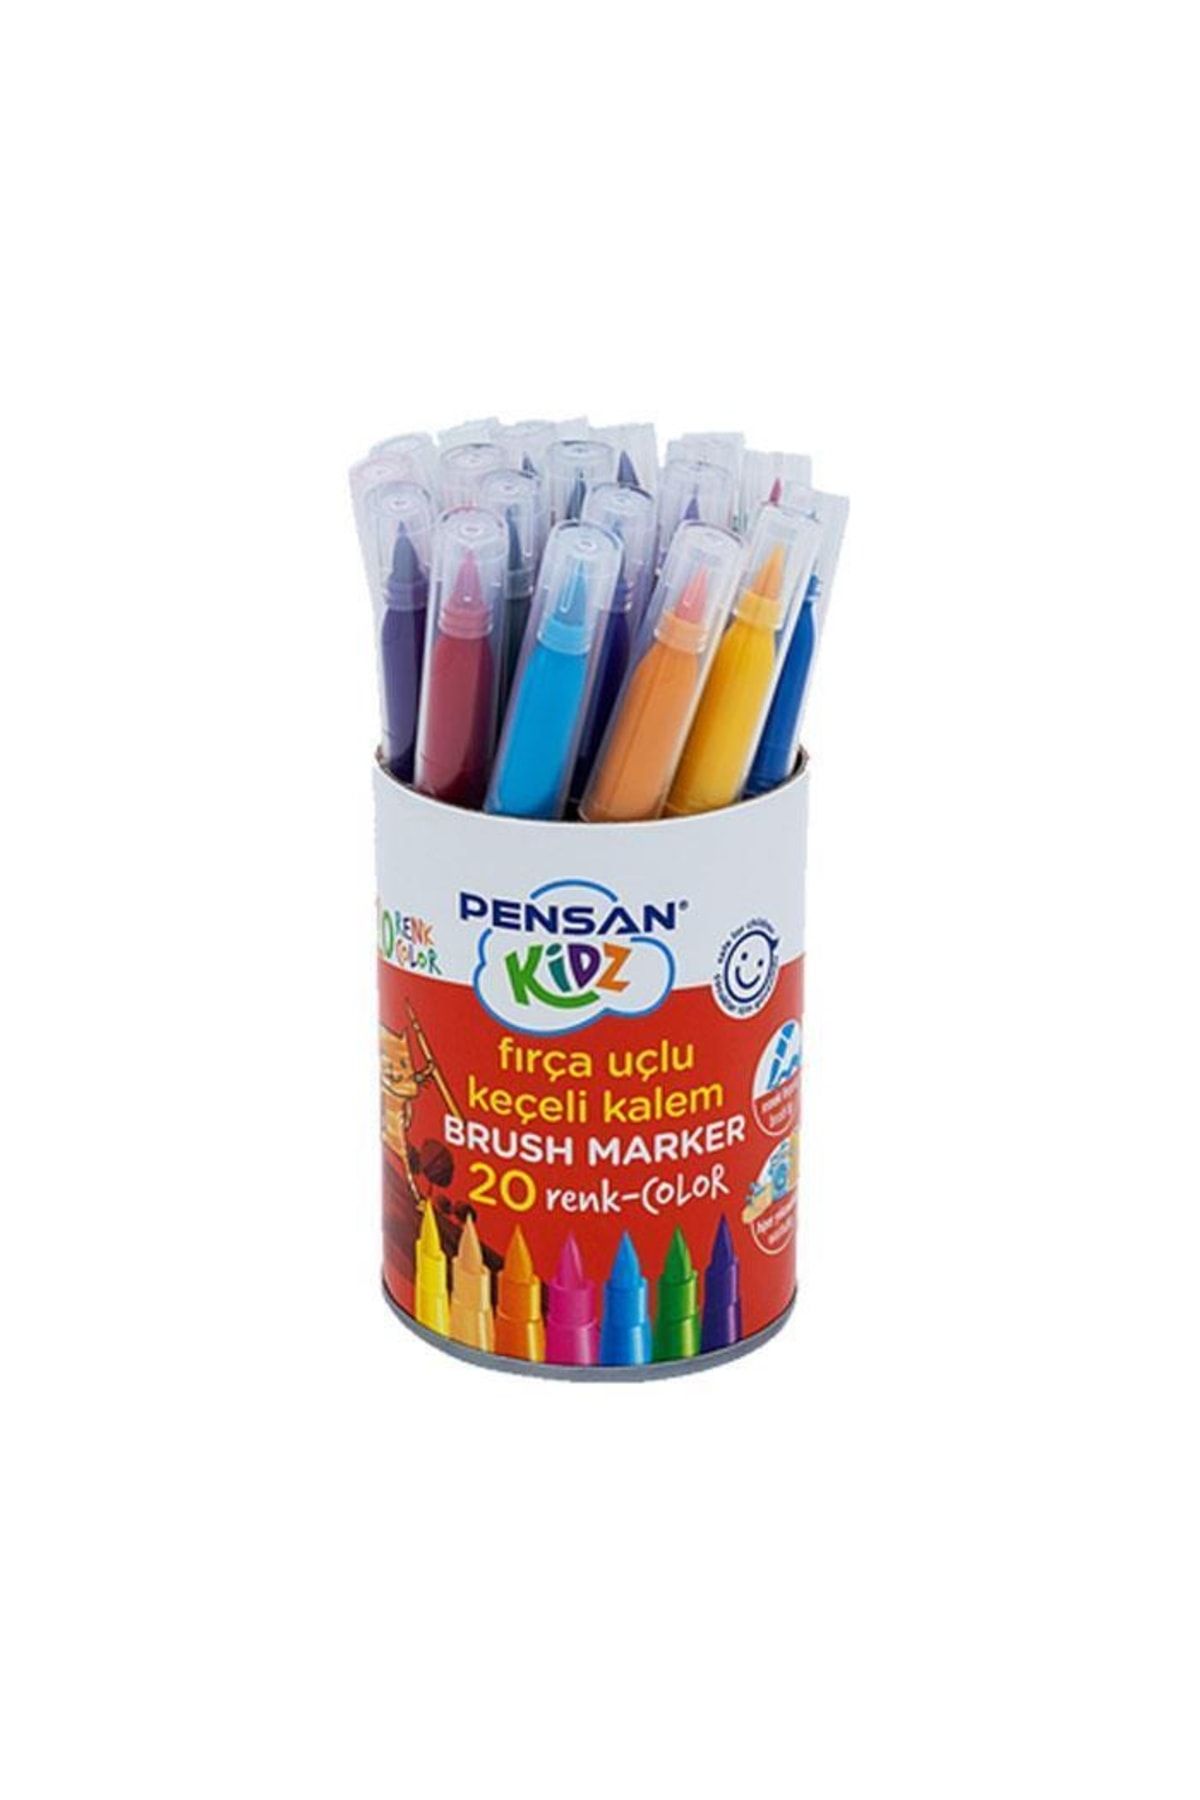 Pensan Kidz Fırça Uçlu Keçeli Kalem 20 Renk -